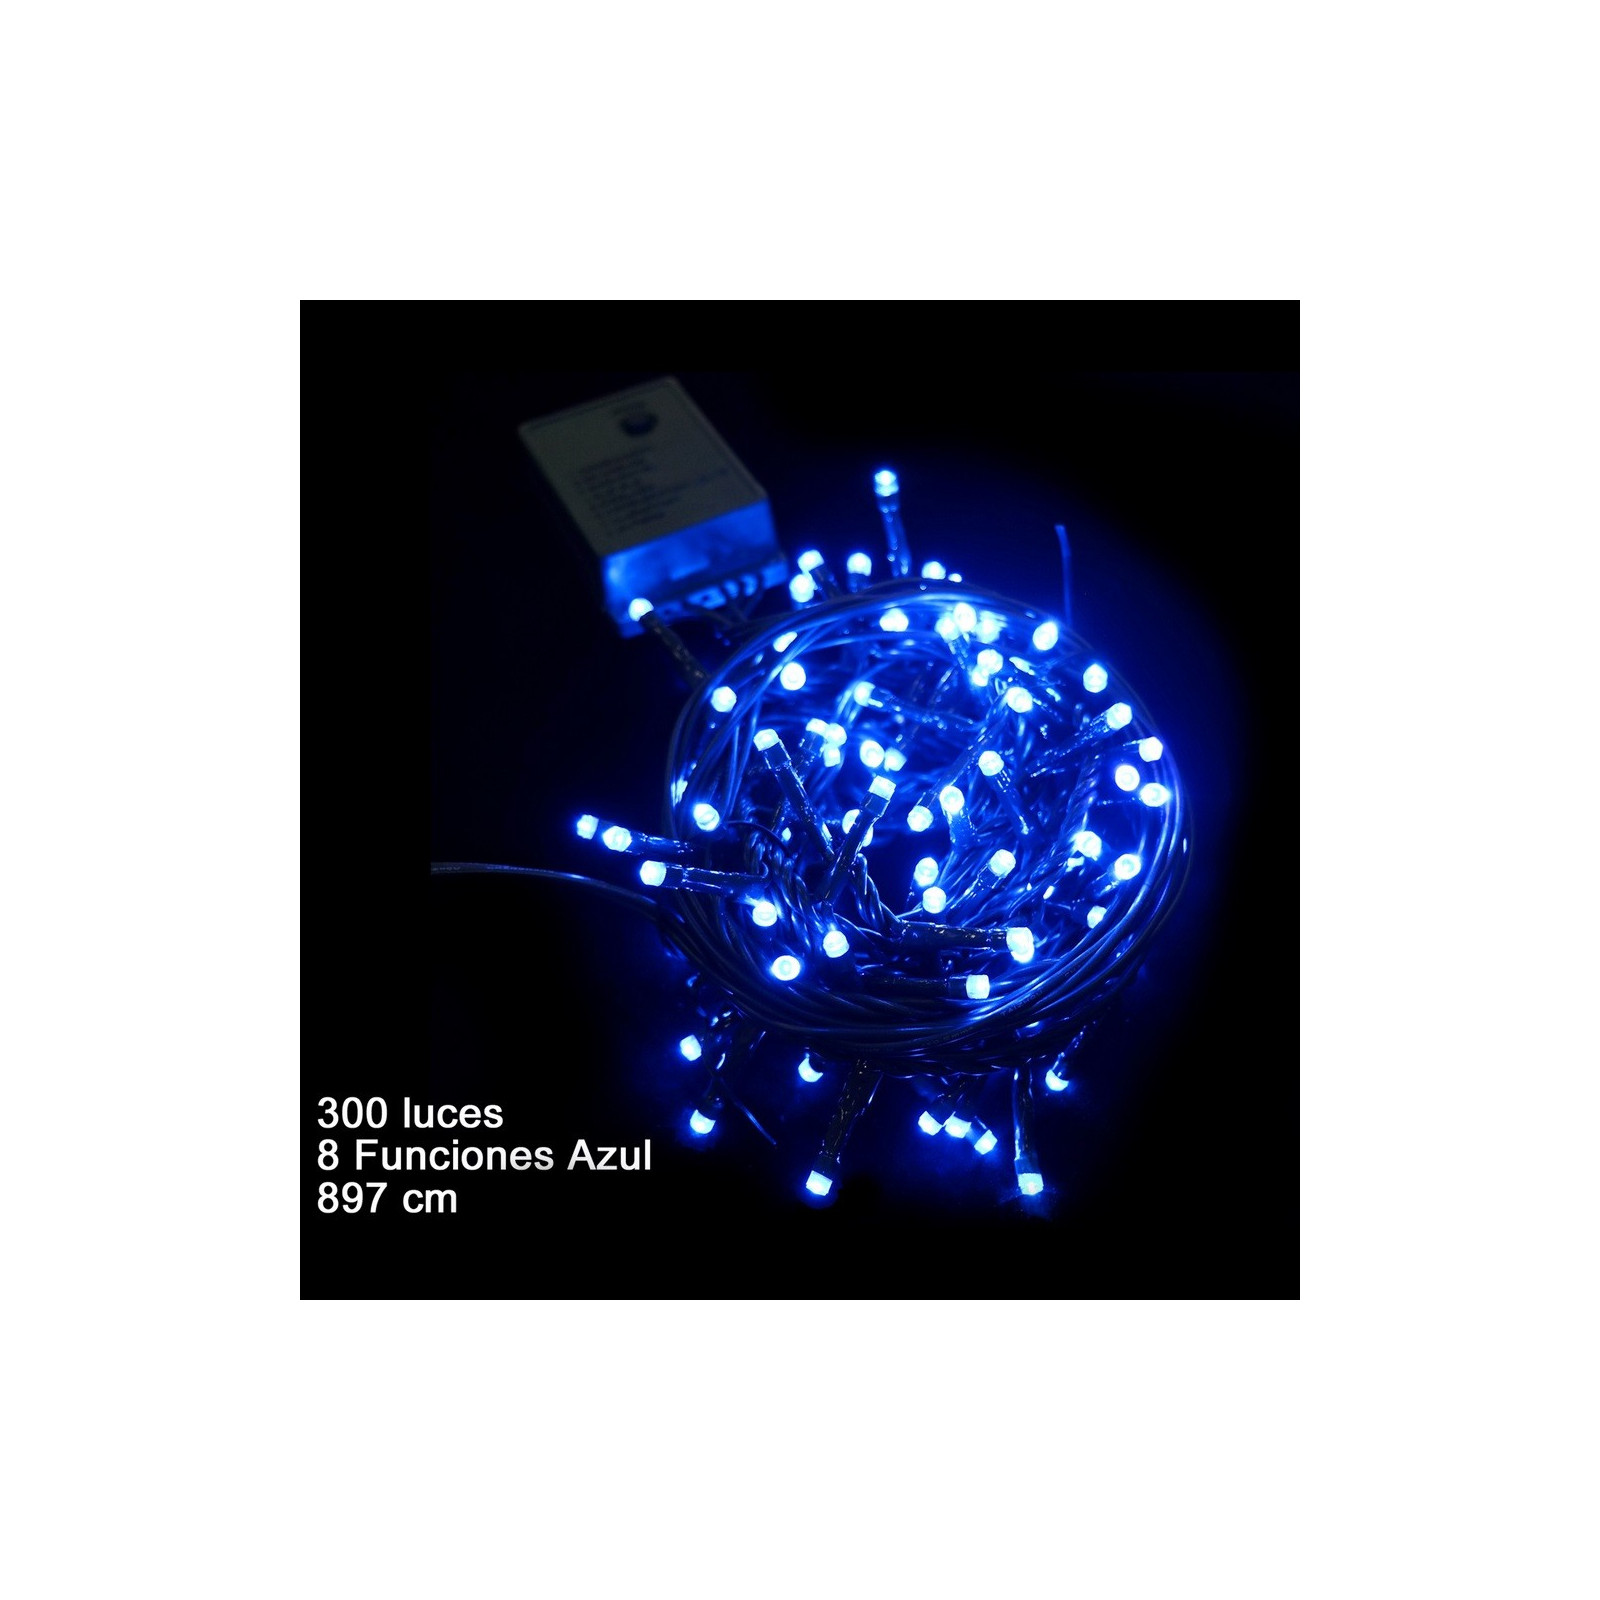 300 luces led 8 funciones azul 897 cm